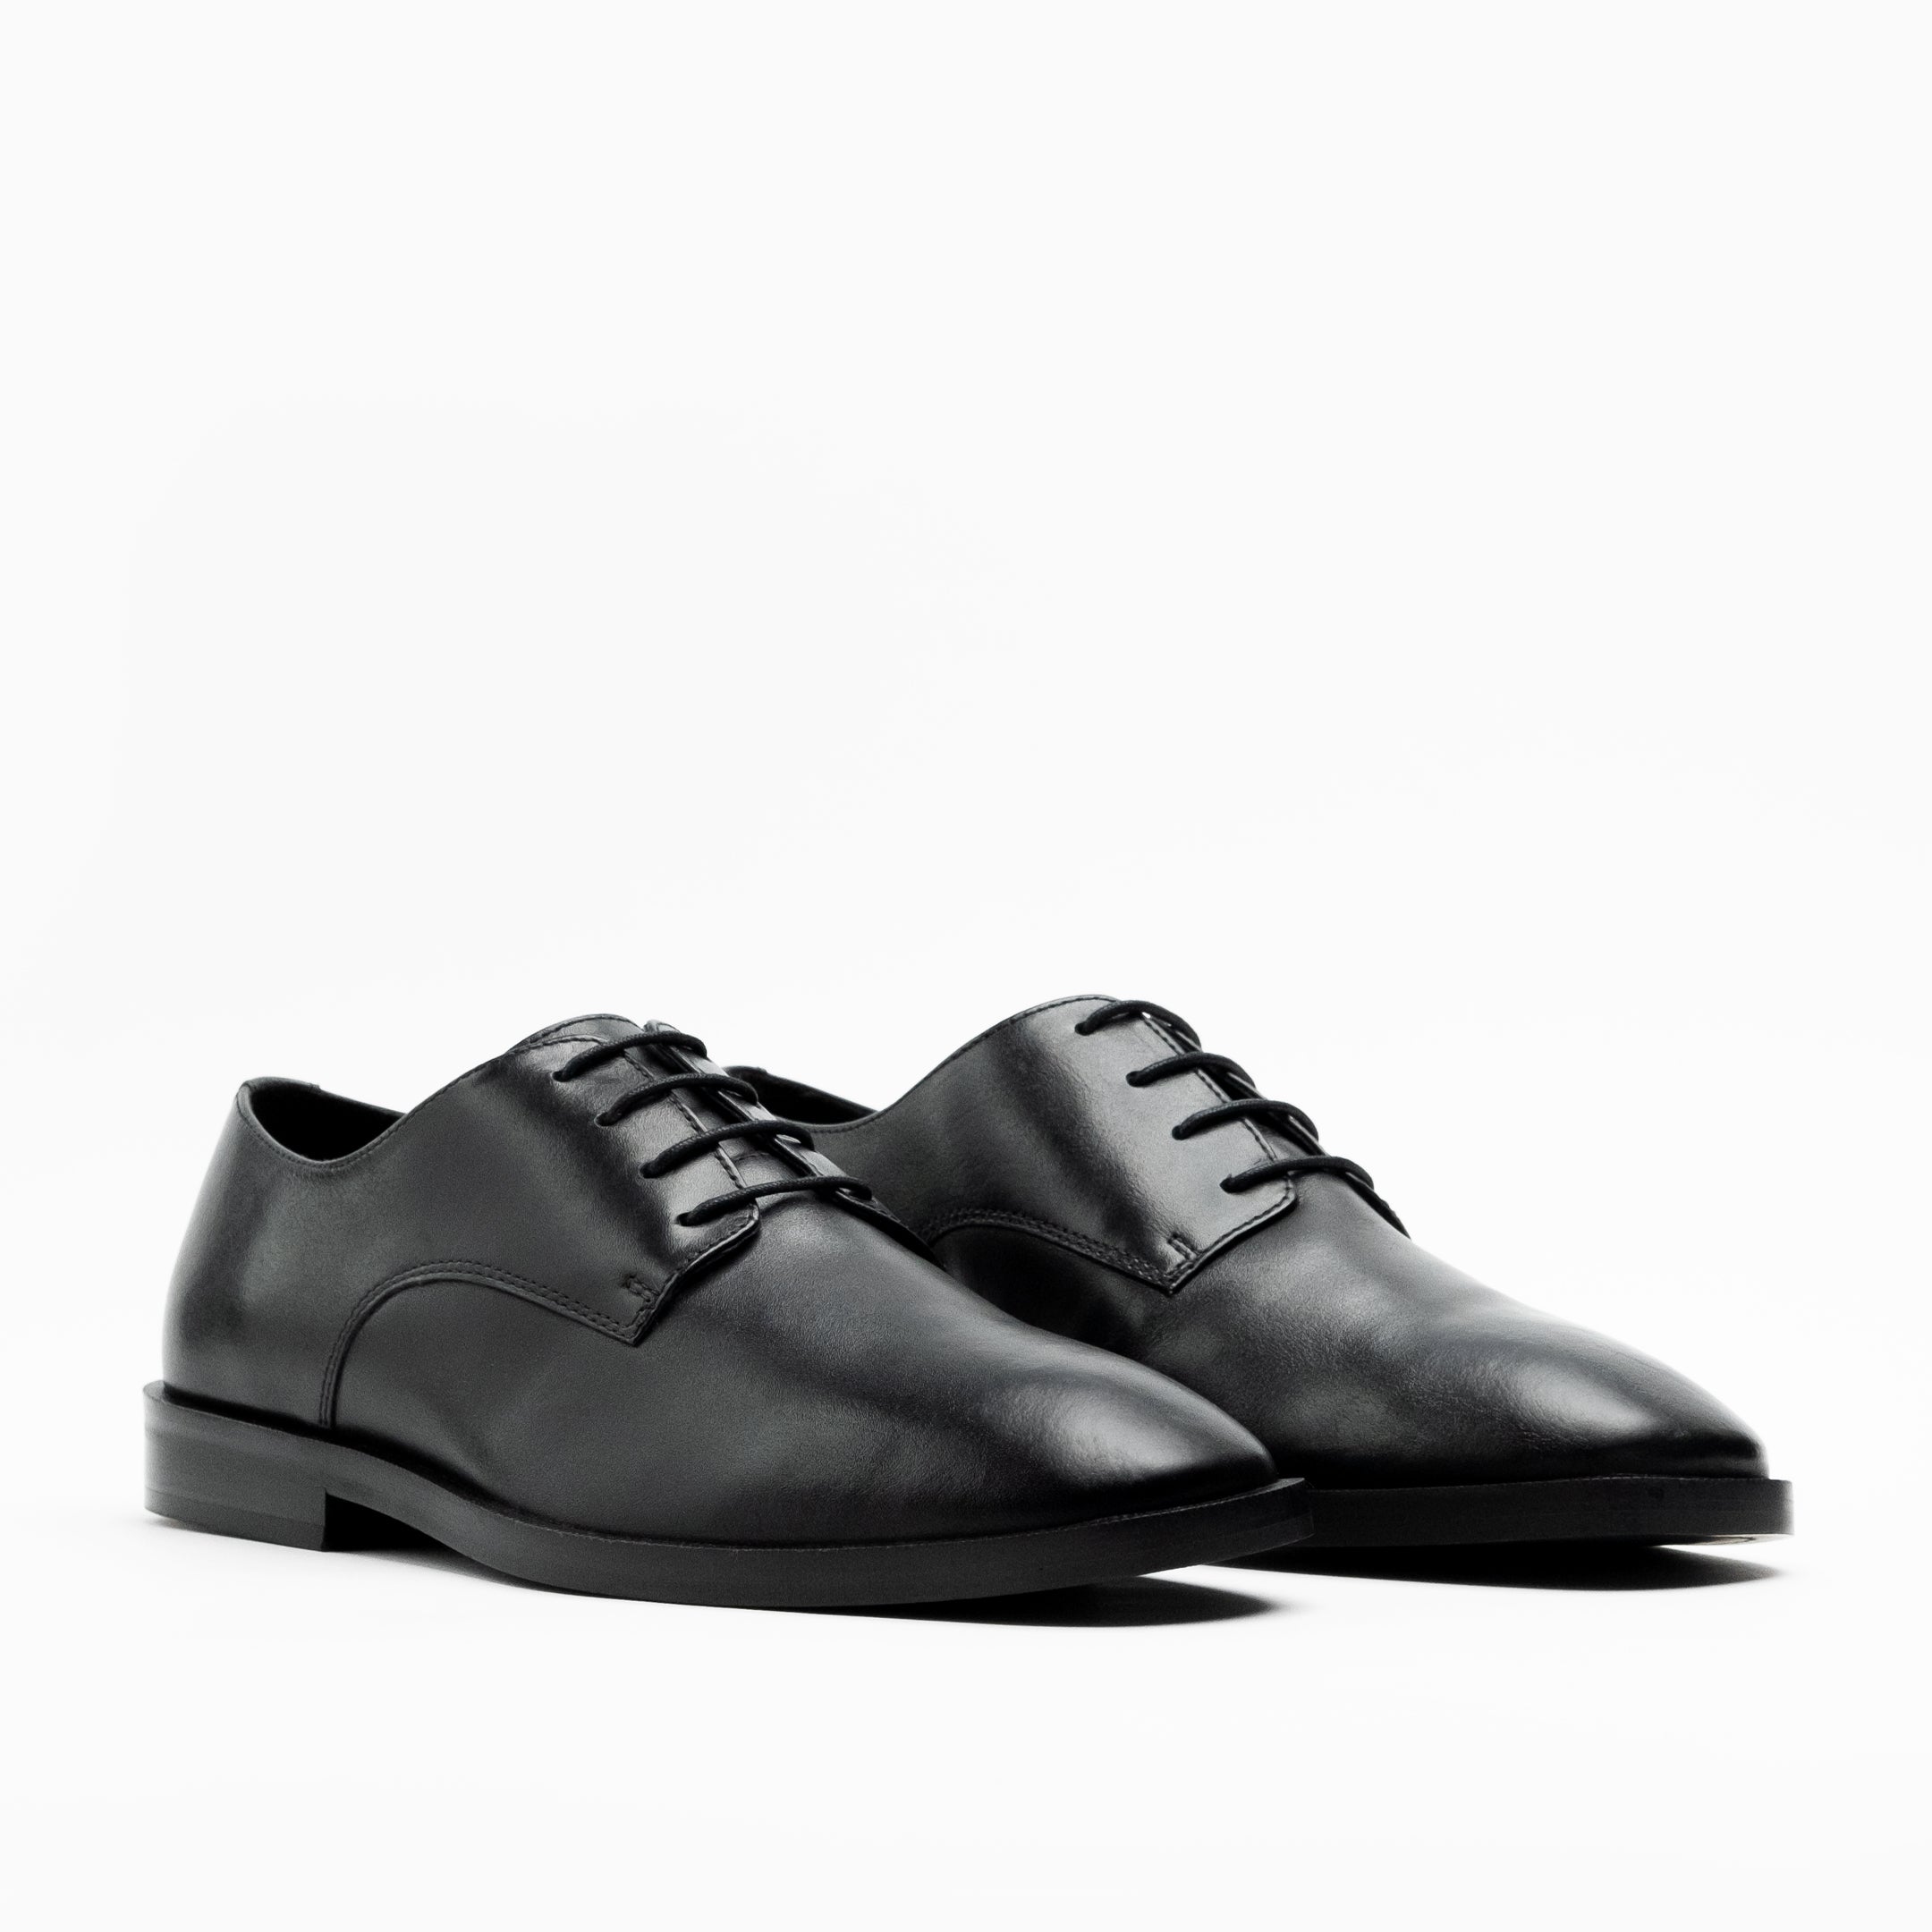 Product Video - Walk London Alex Derby Shoe - Black Leather